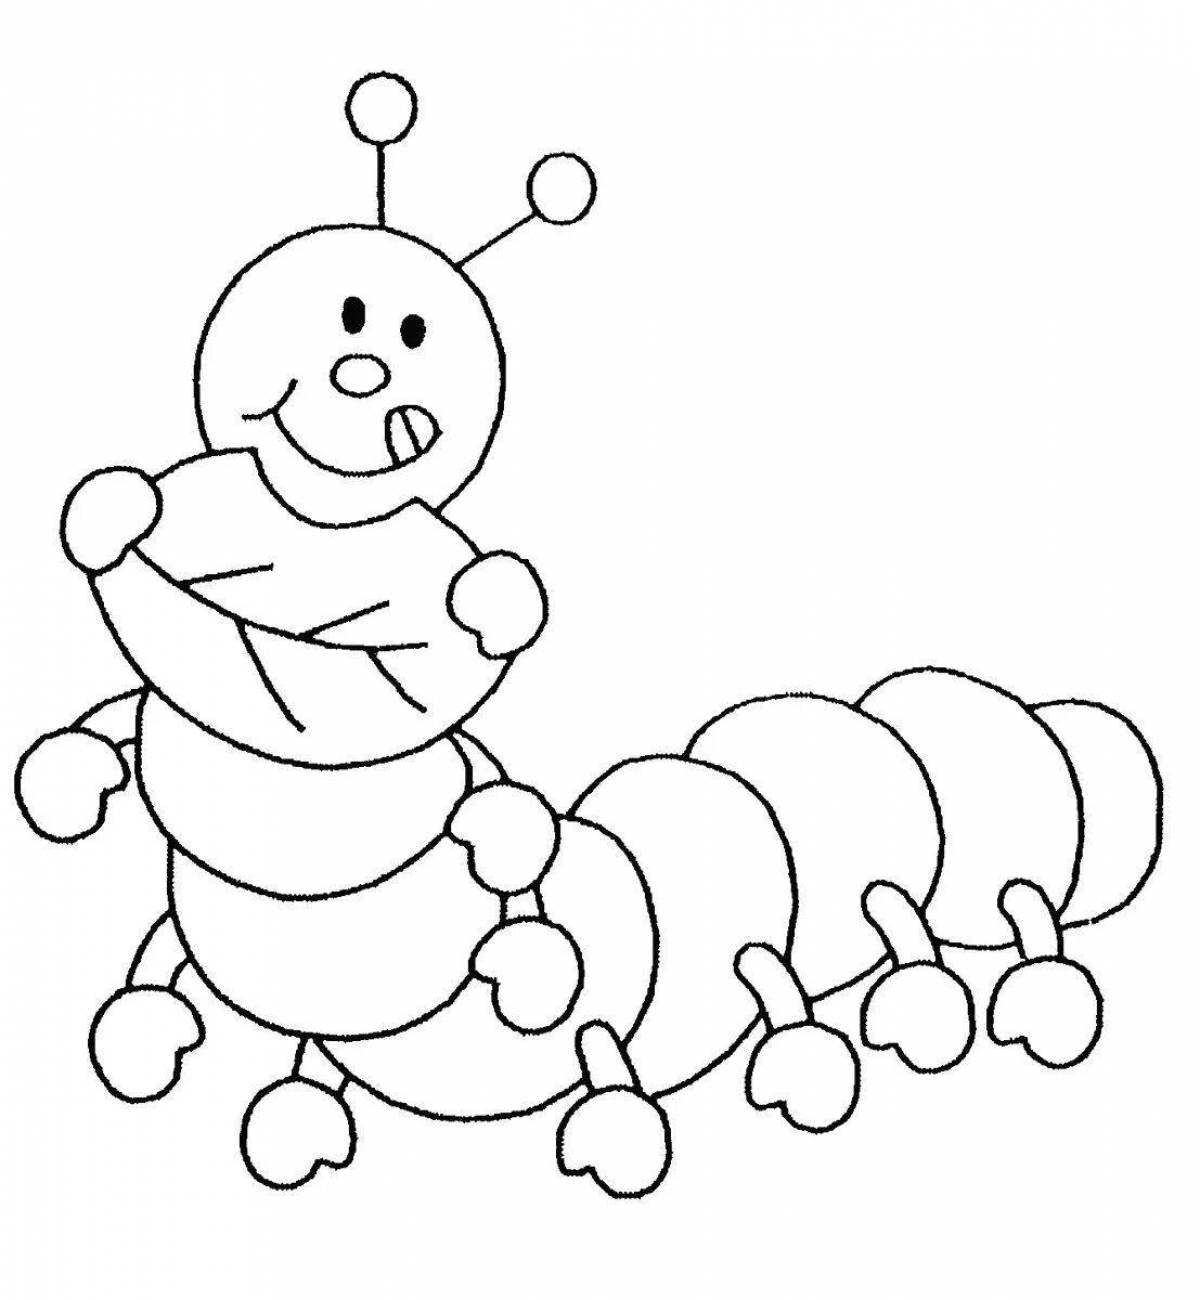 Funny caterpillar coloring book for preschoolers